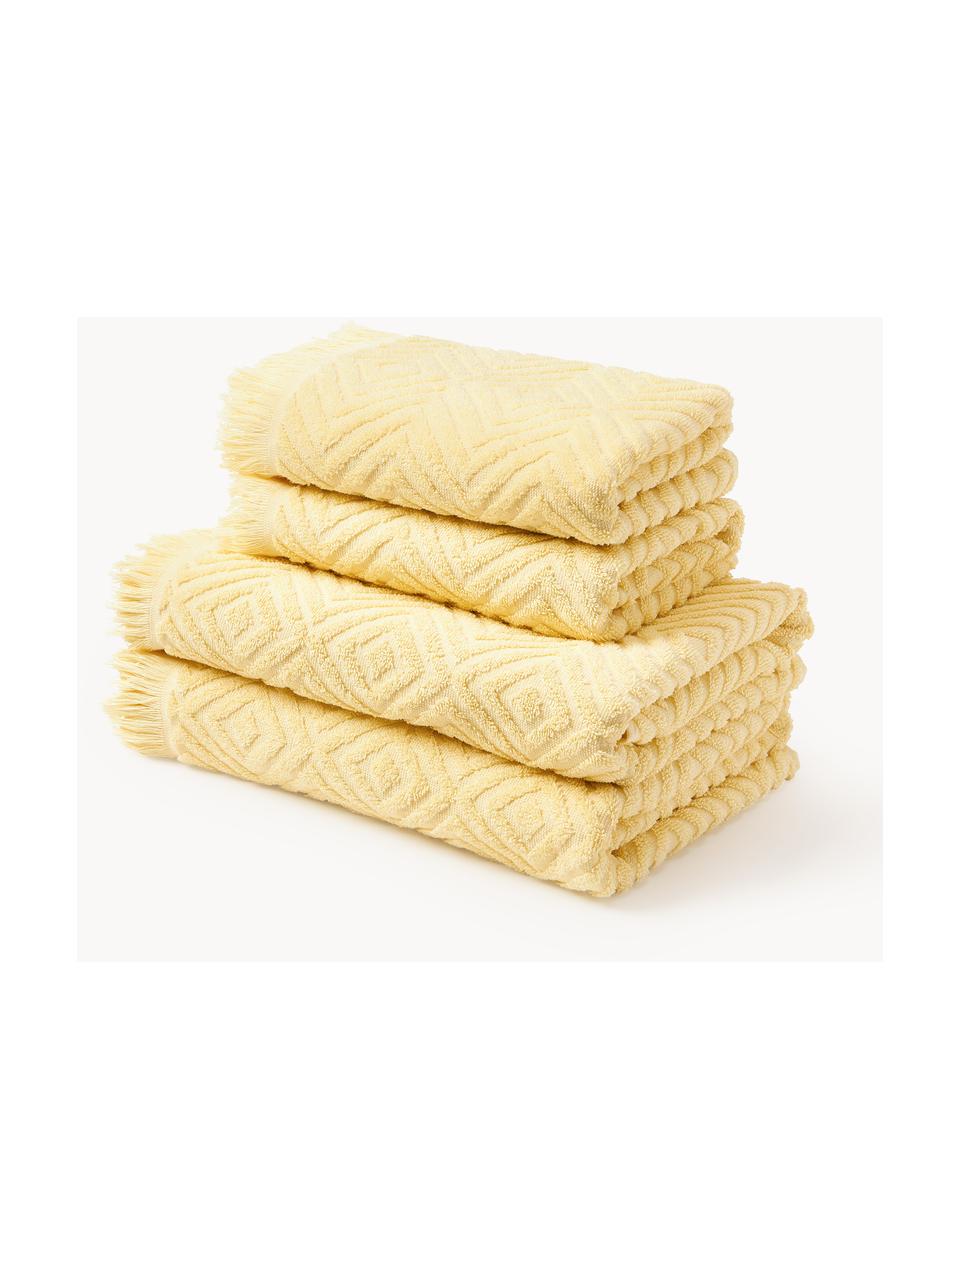 Set de toallas texturizadas Jacqui, tamaños diferentes, Amarillo claro, Set de 3 (toalla tocador, toalla lavabo y toalla ducha)